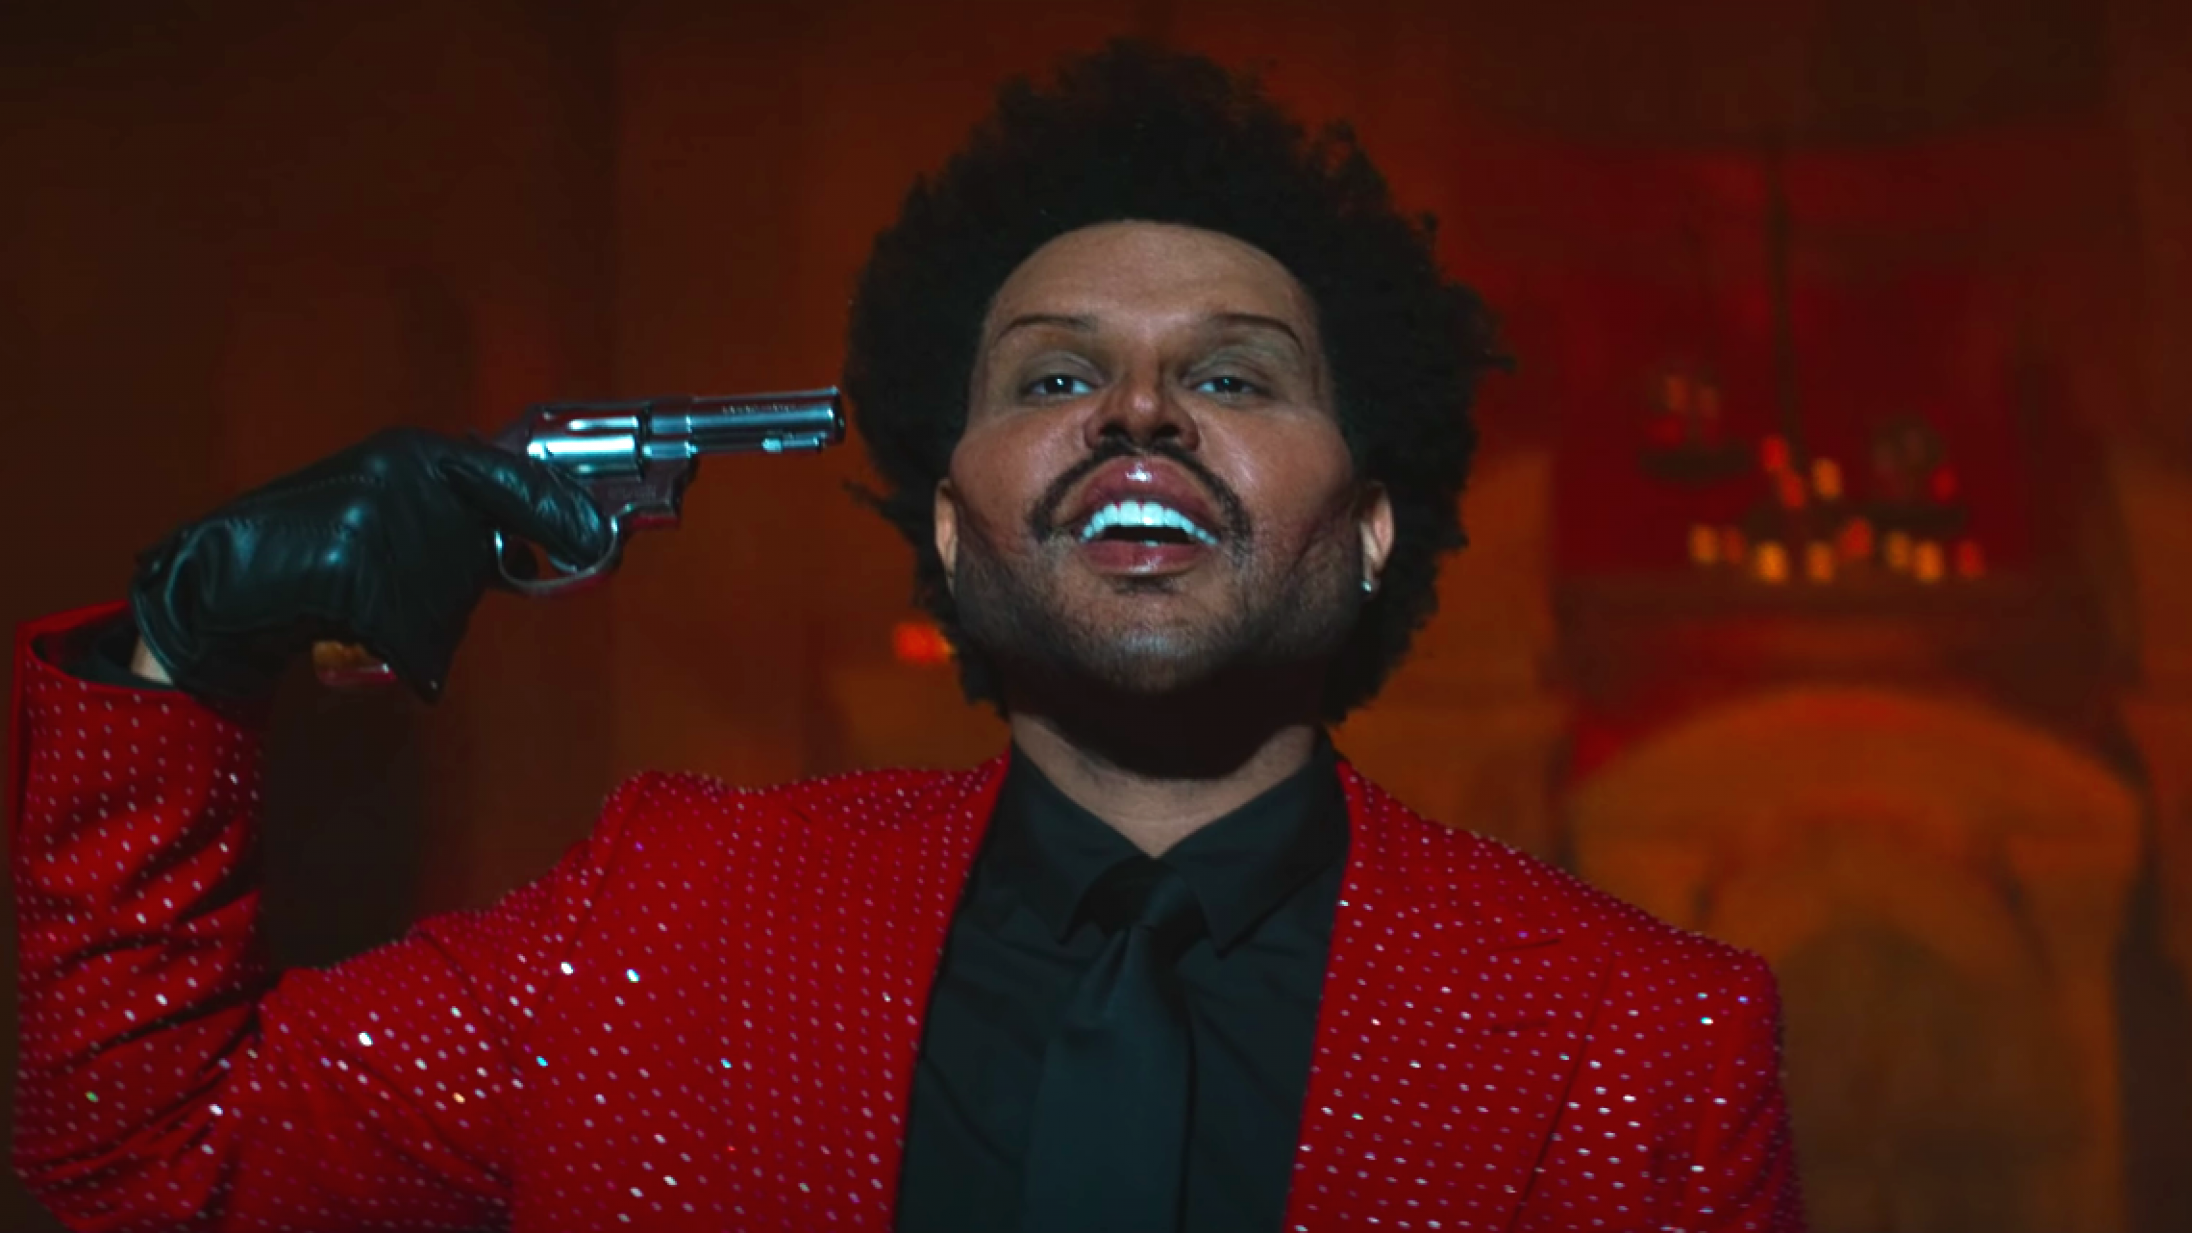 Перевод песен викенда. The Weeknd. The Weeknd 2021. The Weeknd save your tears. The Weeknd альбом save your tears.